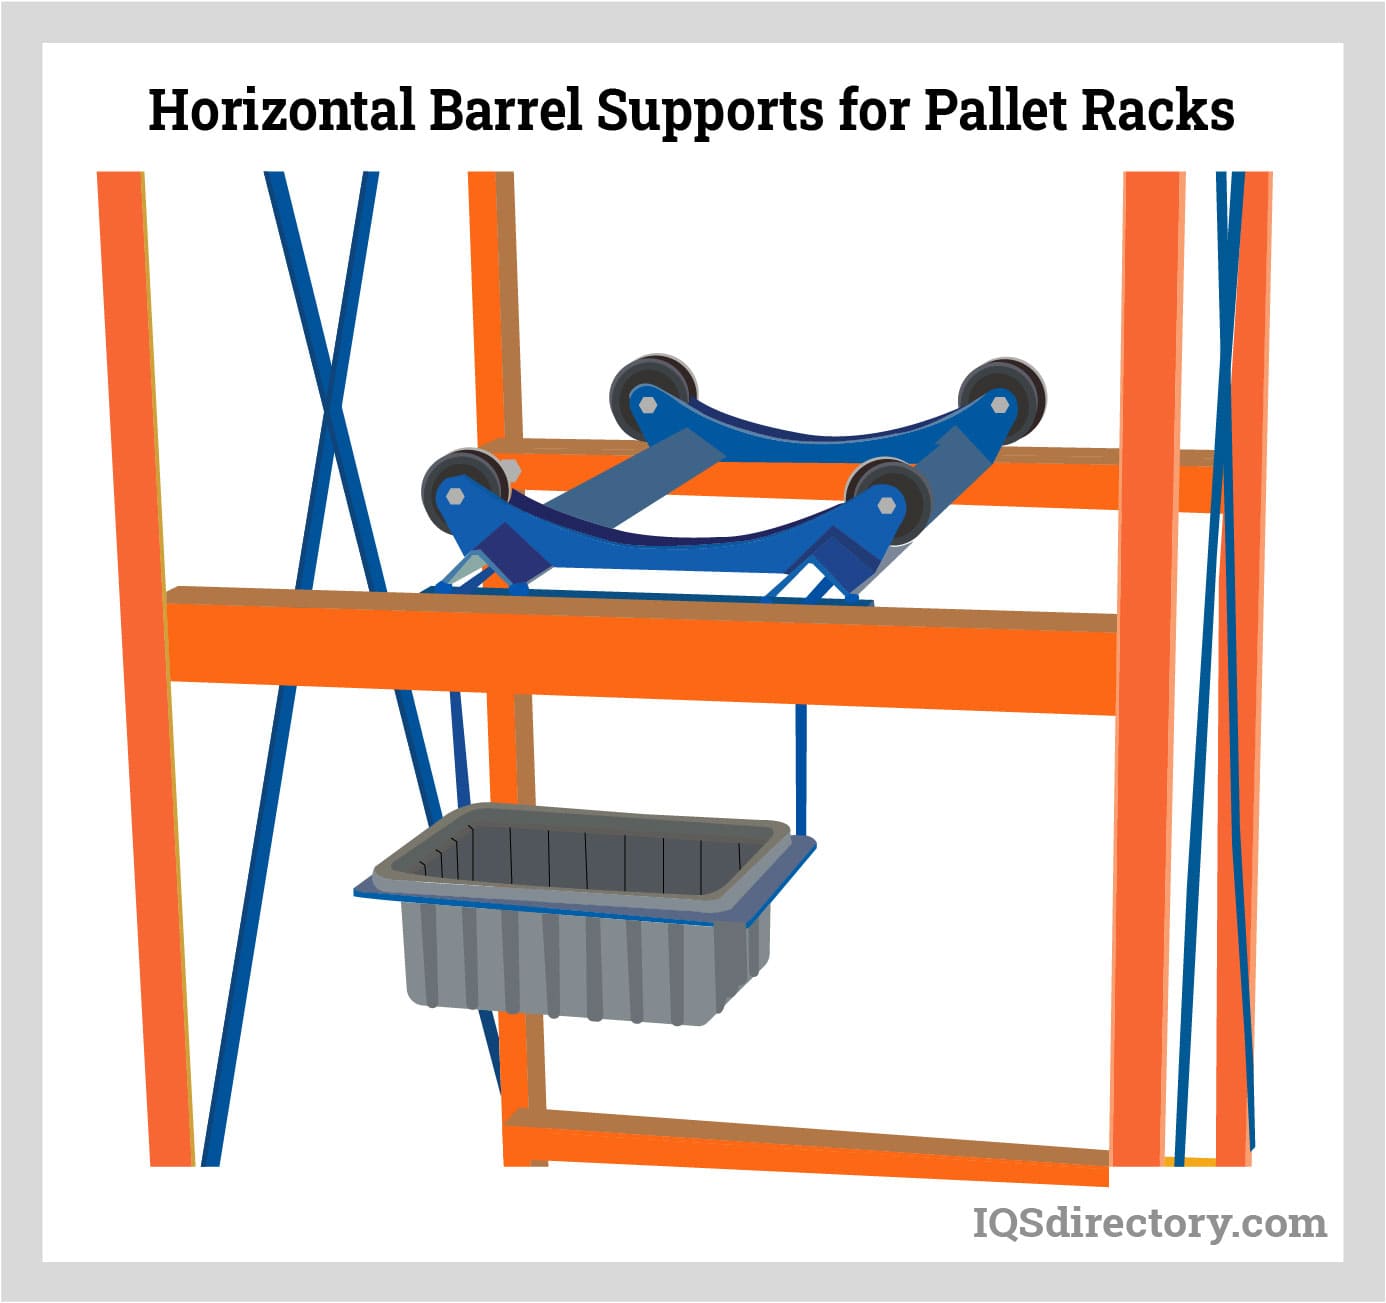 Horizontal Barrel Supports for Pallet Racks